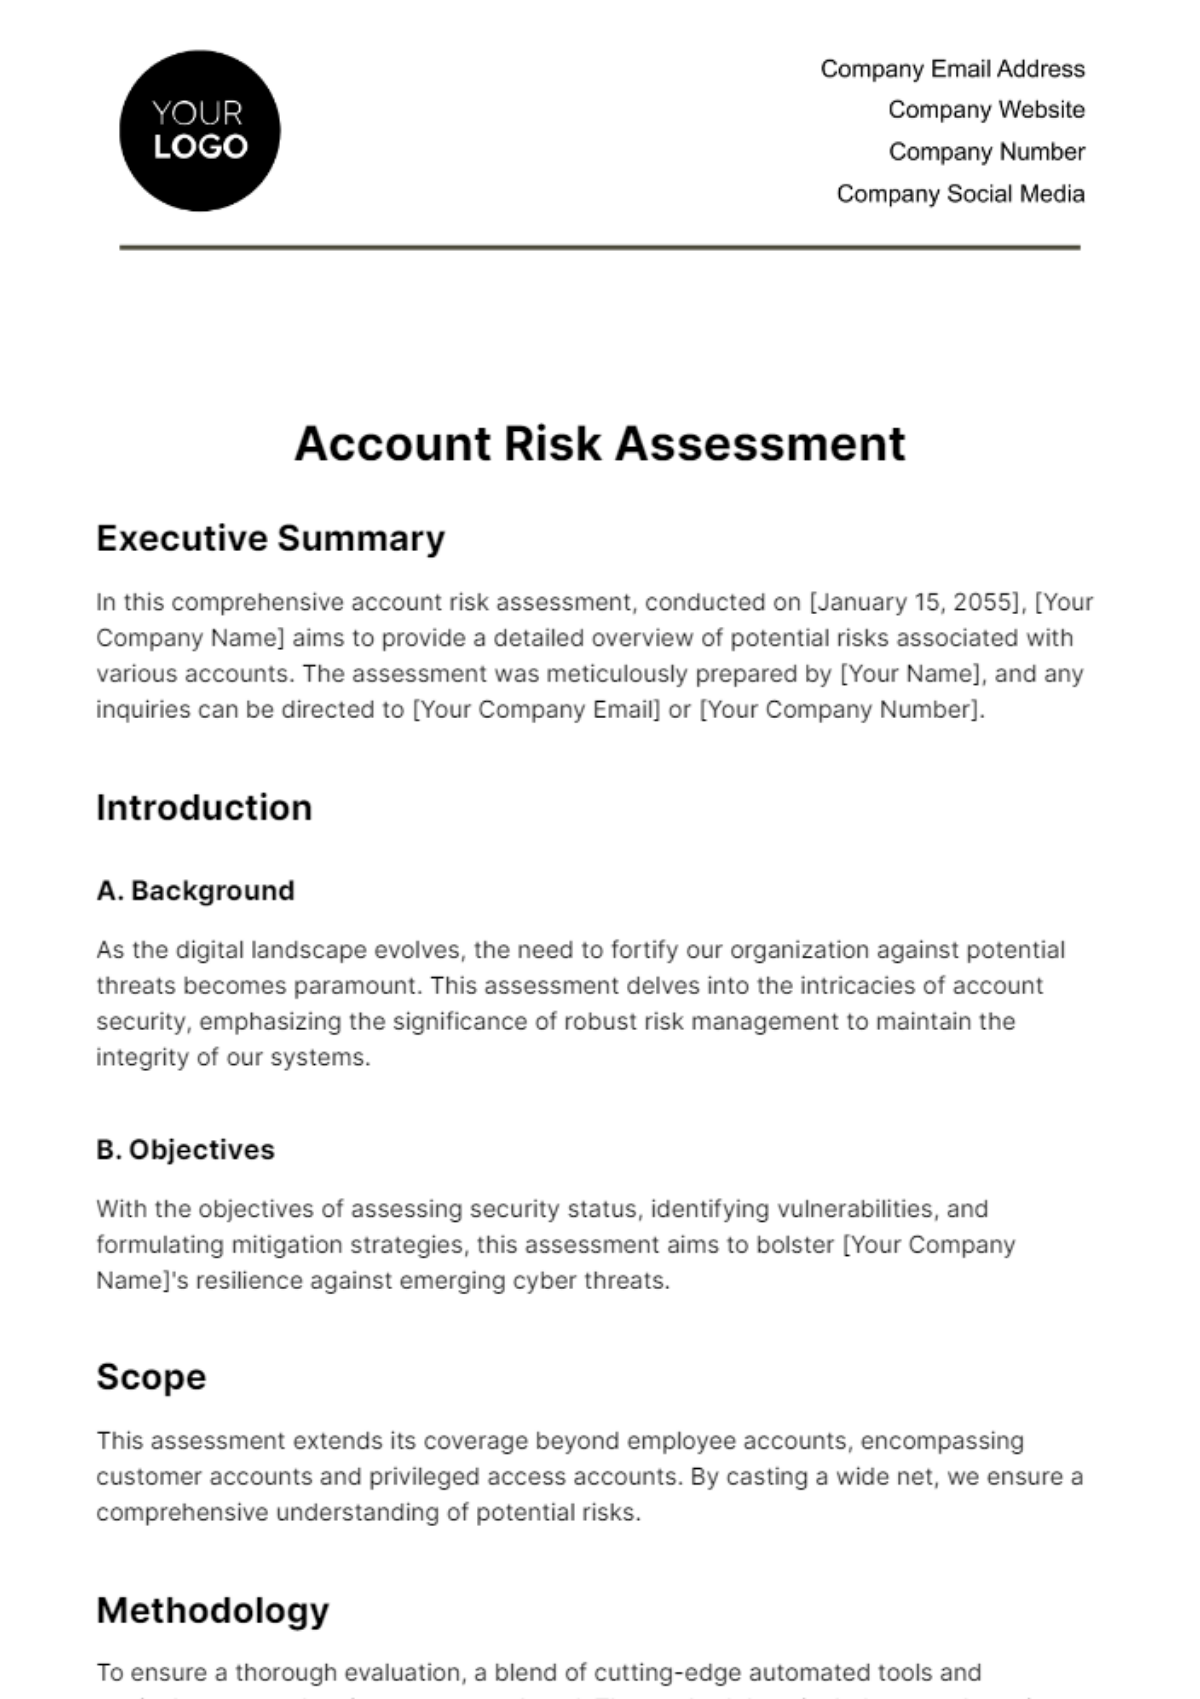 Account Risk Assessment Template